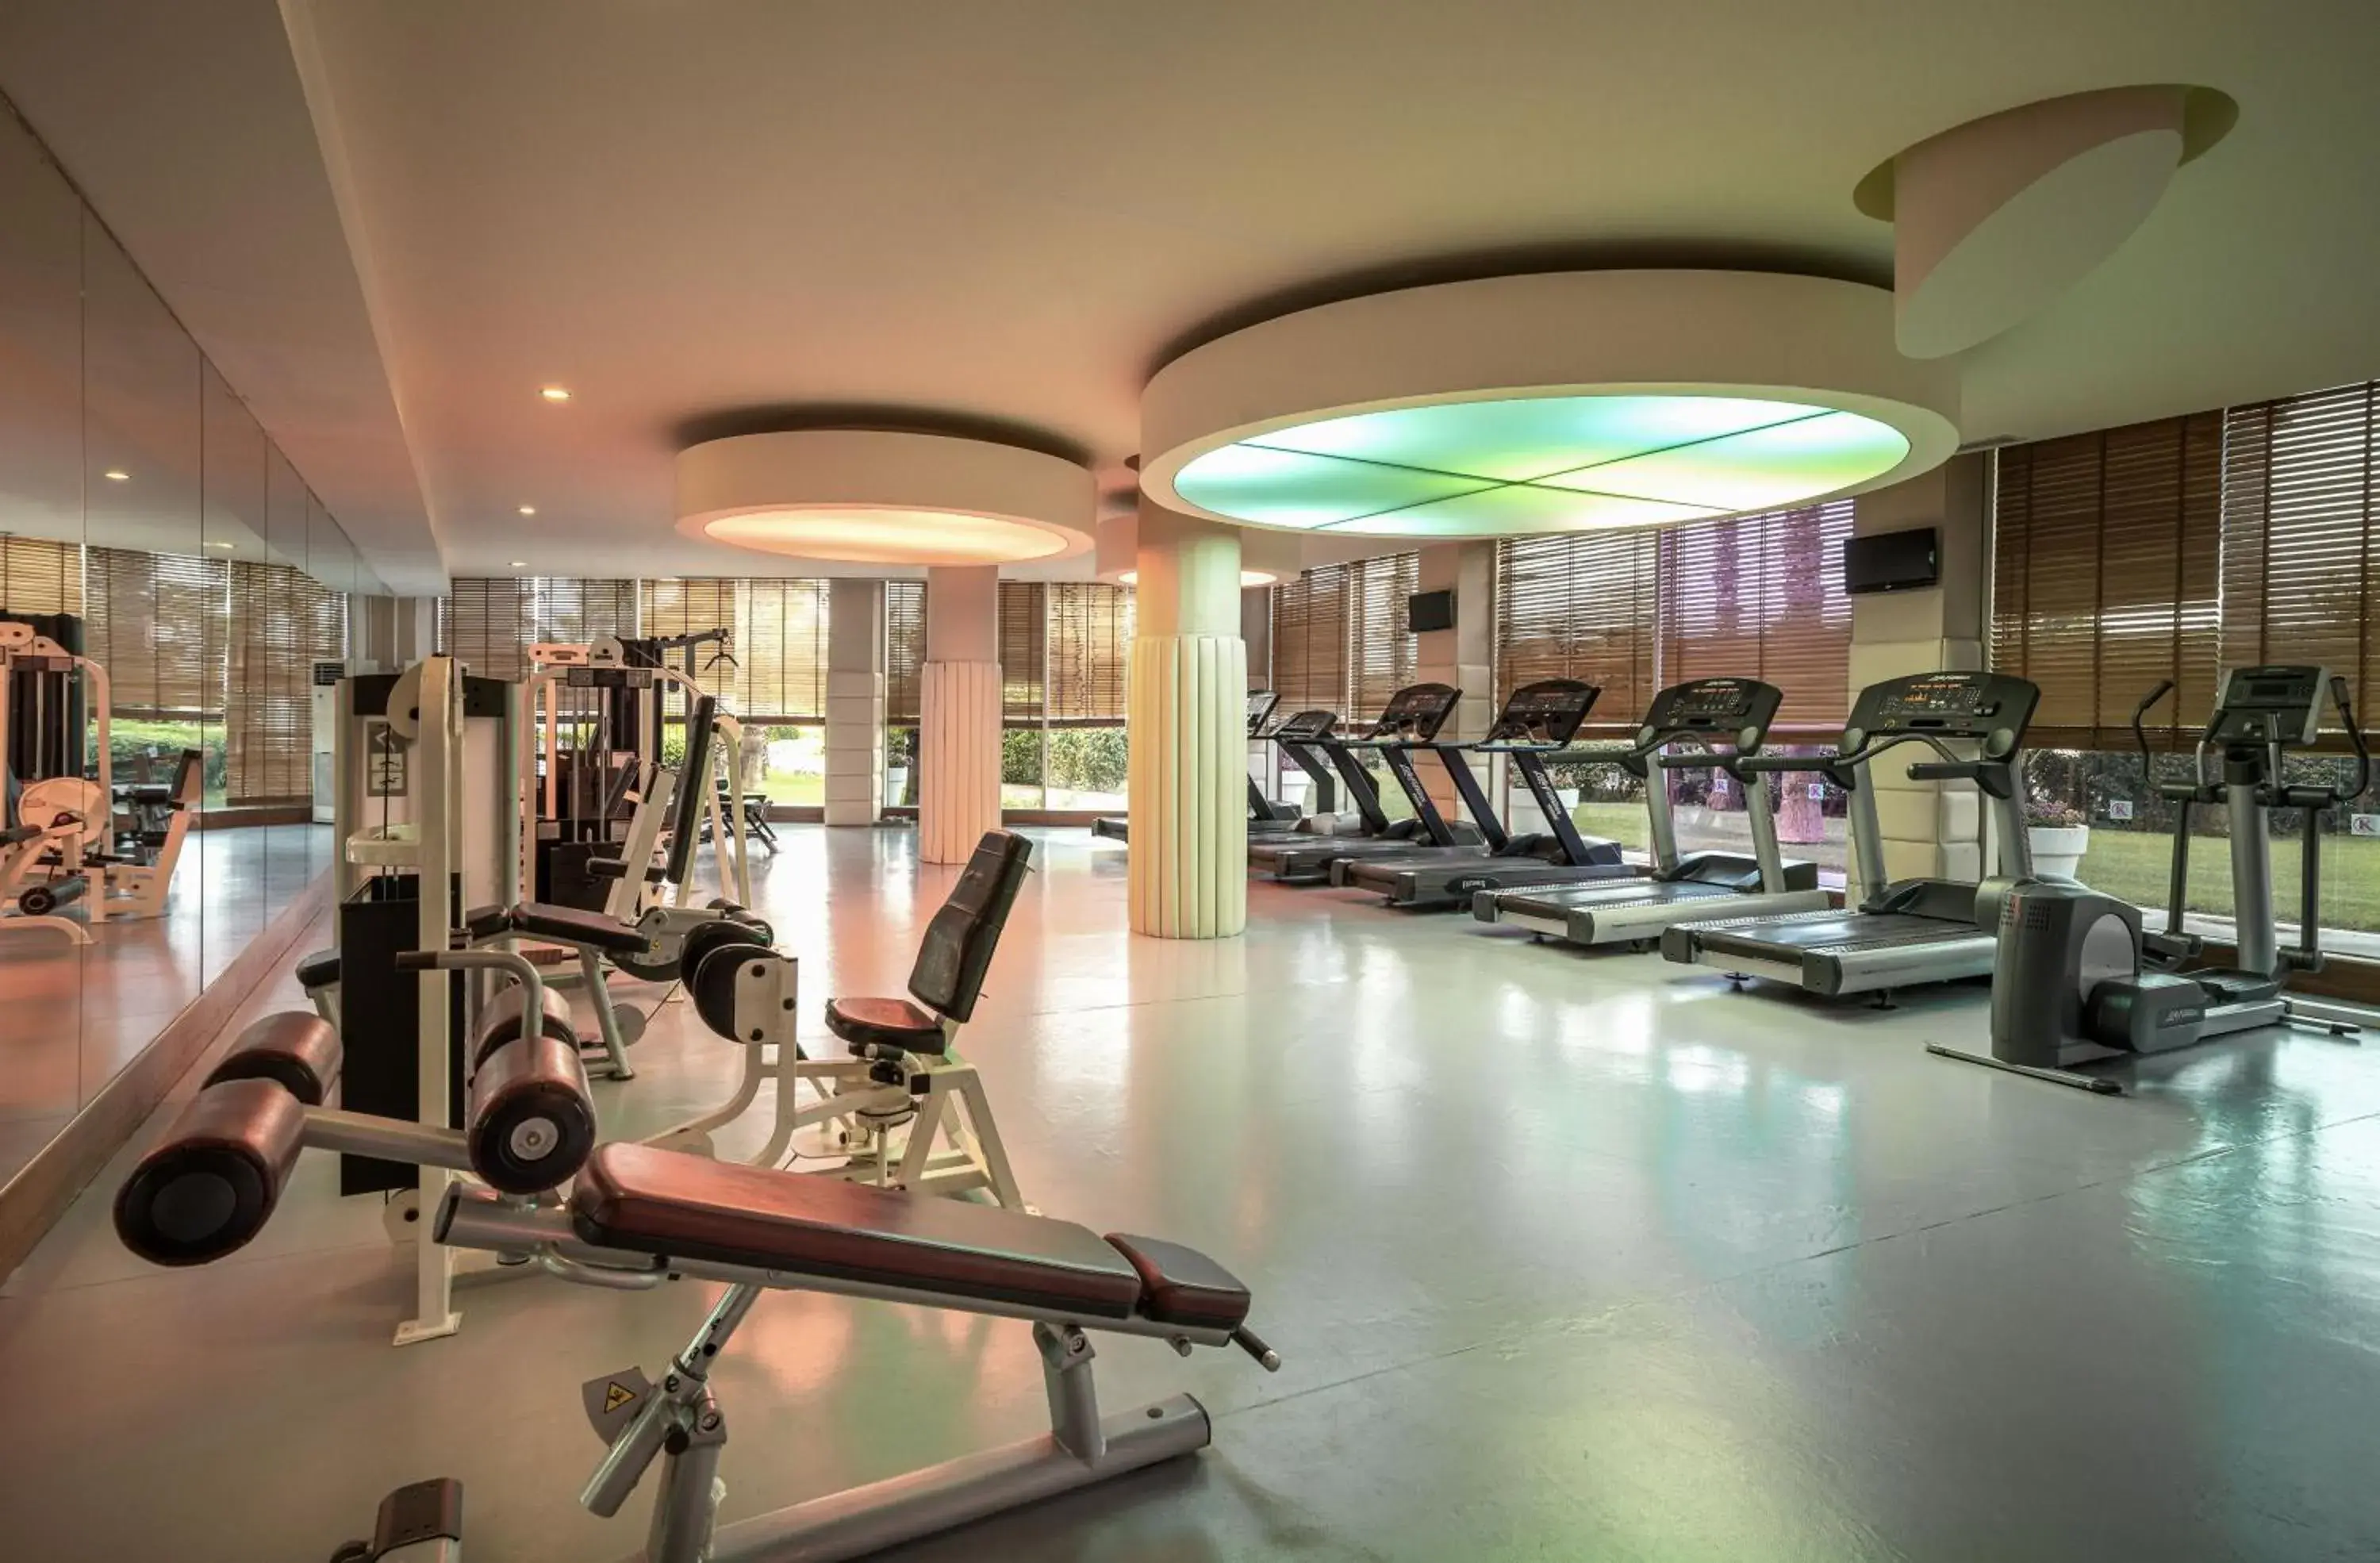 Fitness centre/facilities, Fitness Center/Facilities in Kaya Belek